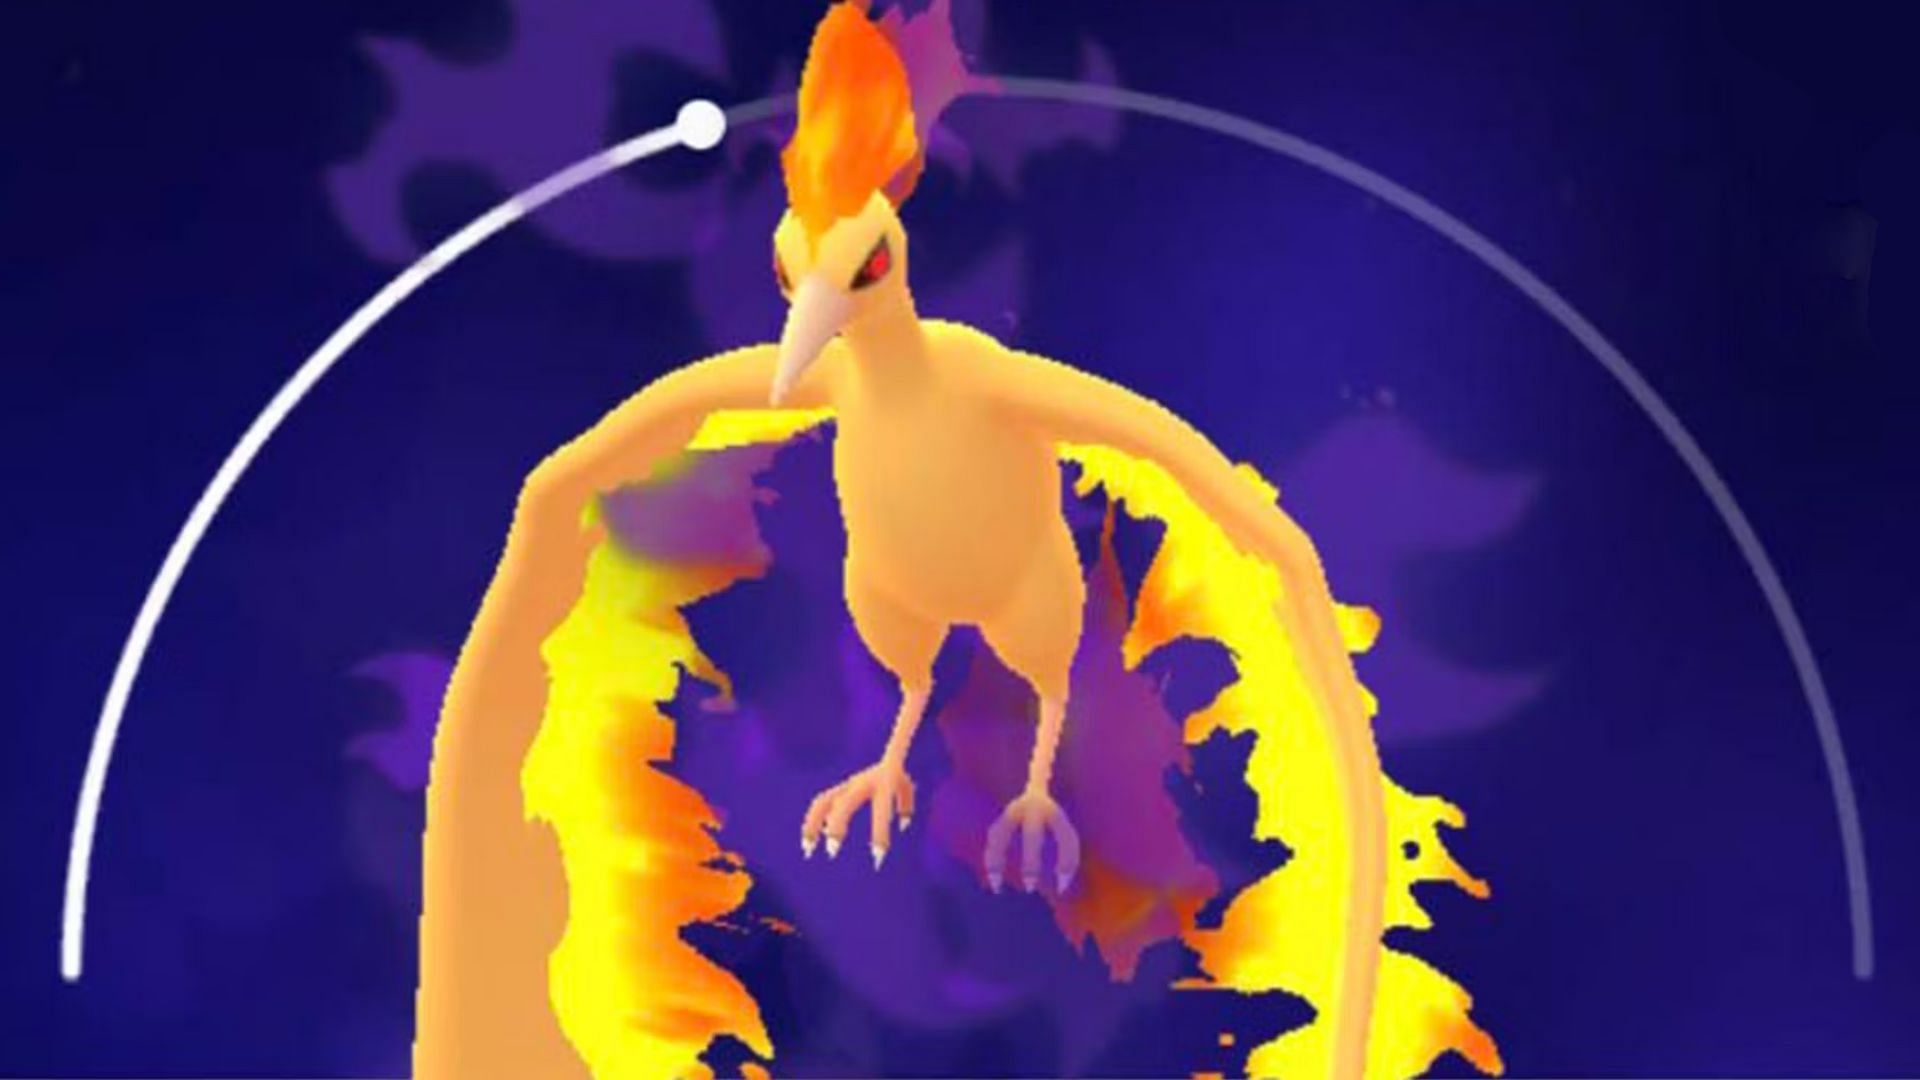 I'm so excited for Shadow Moltres Raids in Pokémon GO! #PokémonGO #Po